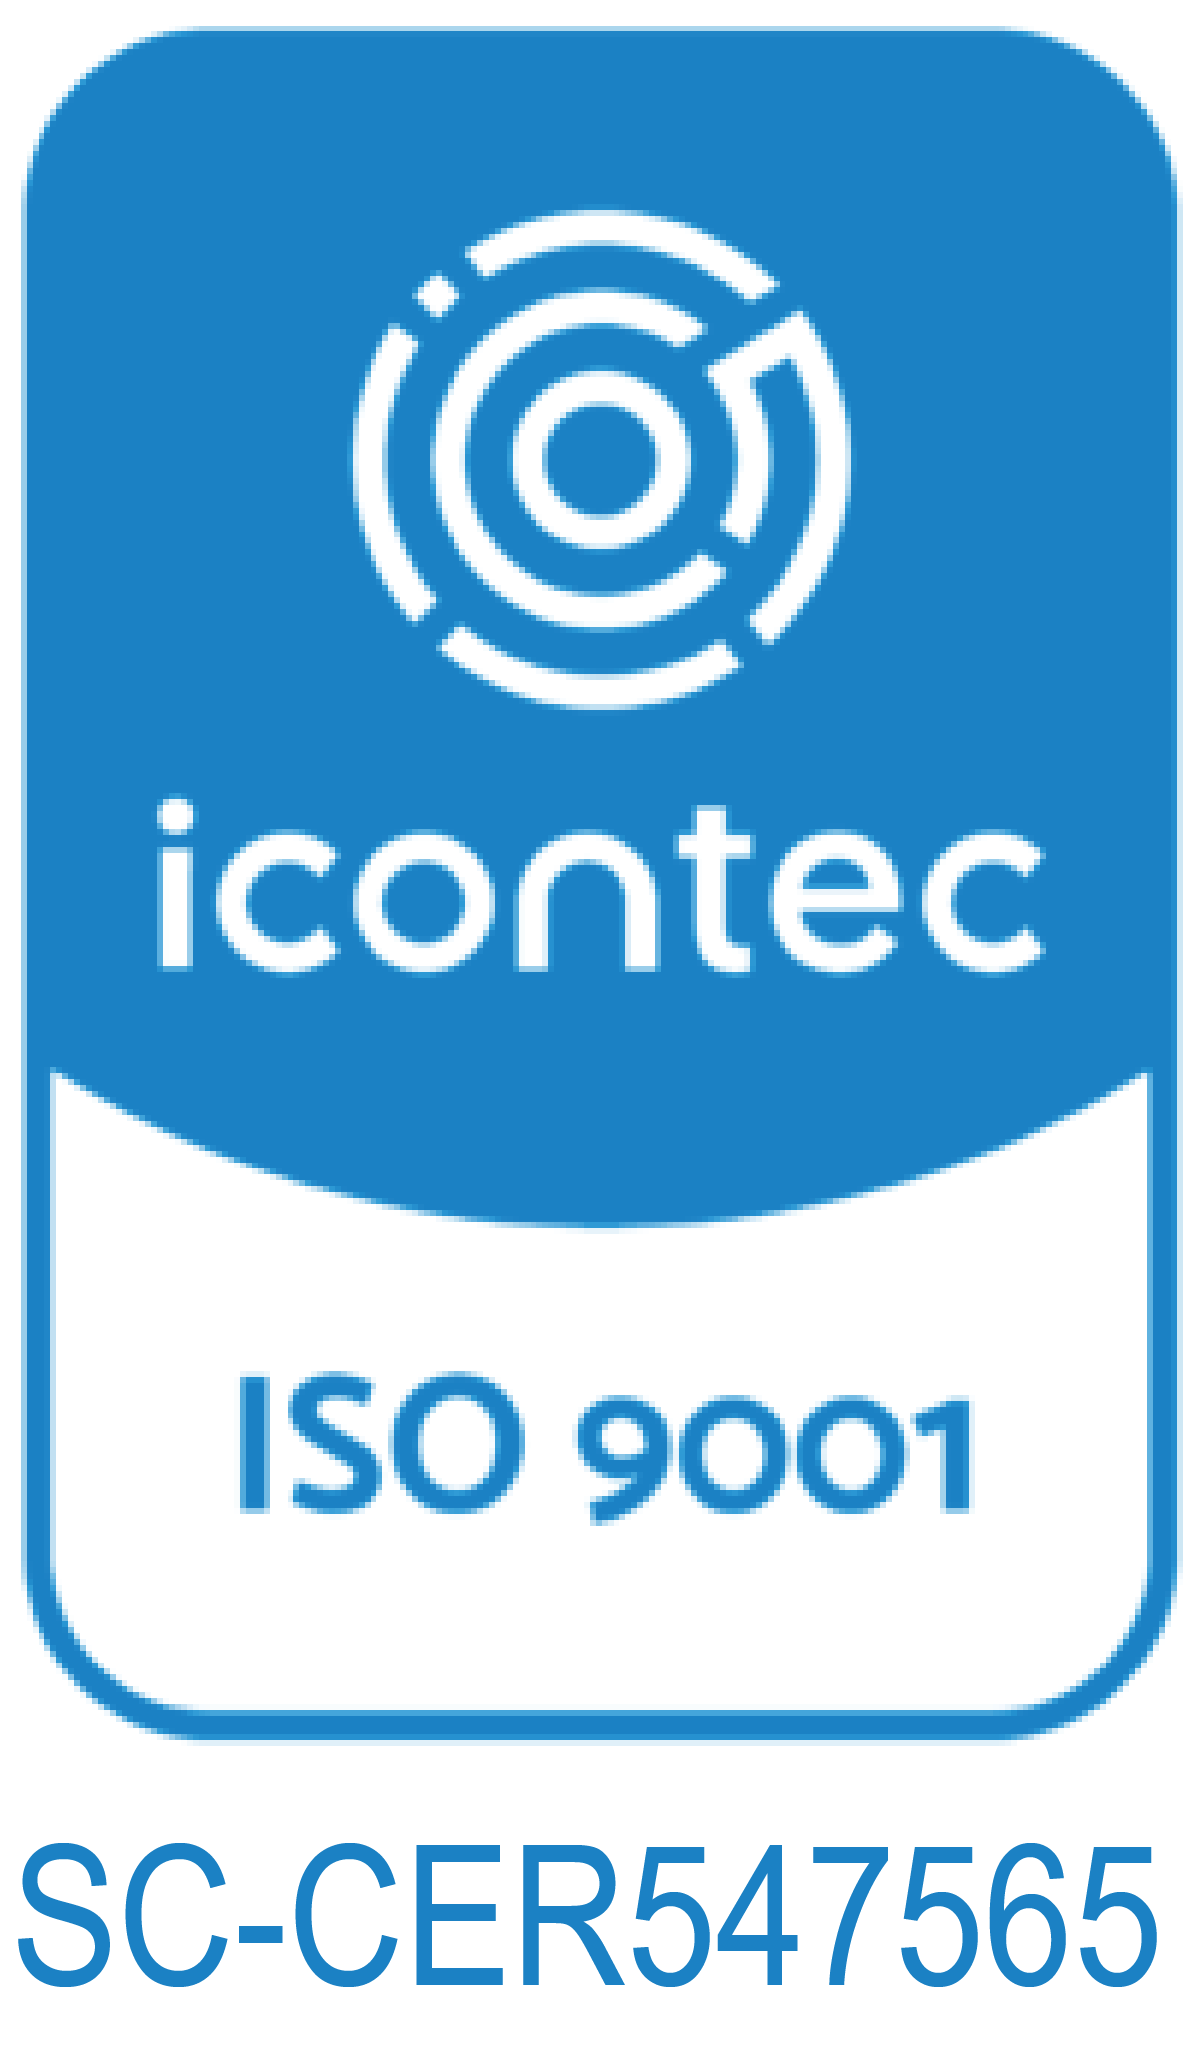 Icontec ISO 9001 SC-CER547565